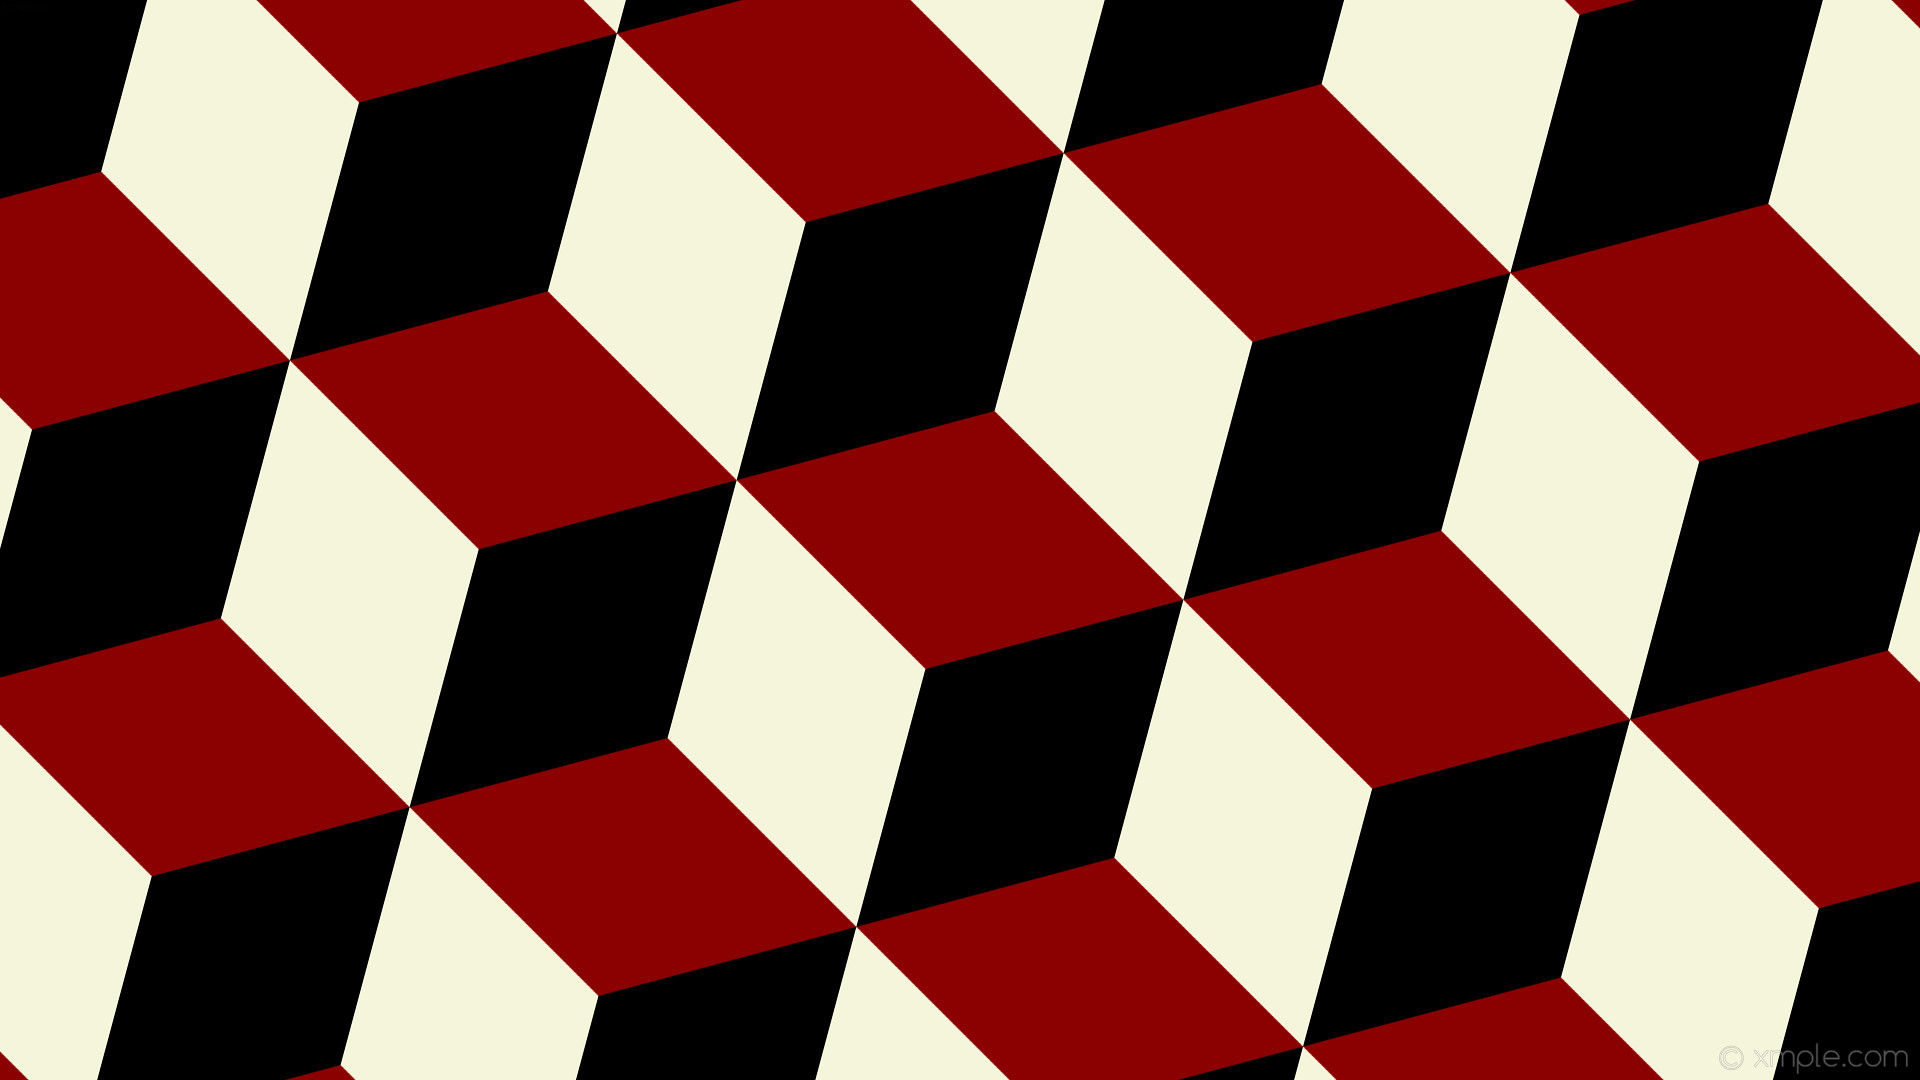 1920x1080 wallpaper red white 3d cubes black dark red beige #8b0000 #f5f5dc #000000  345